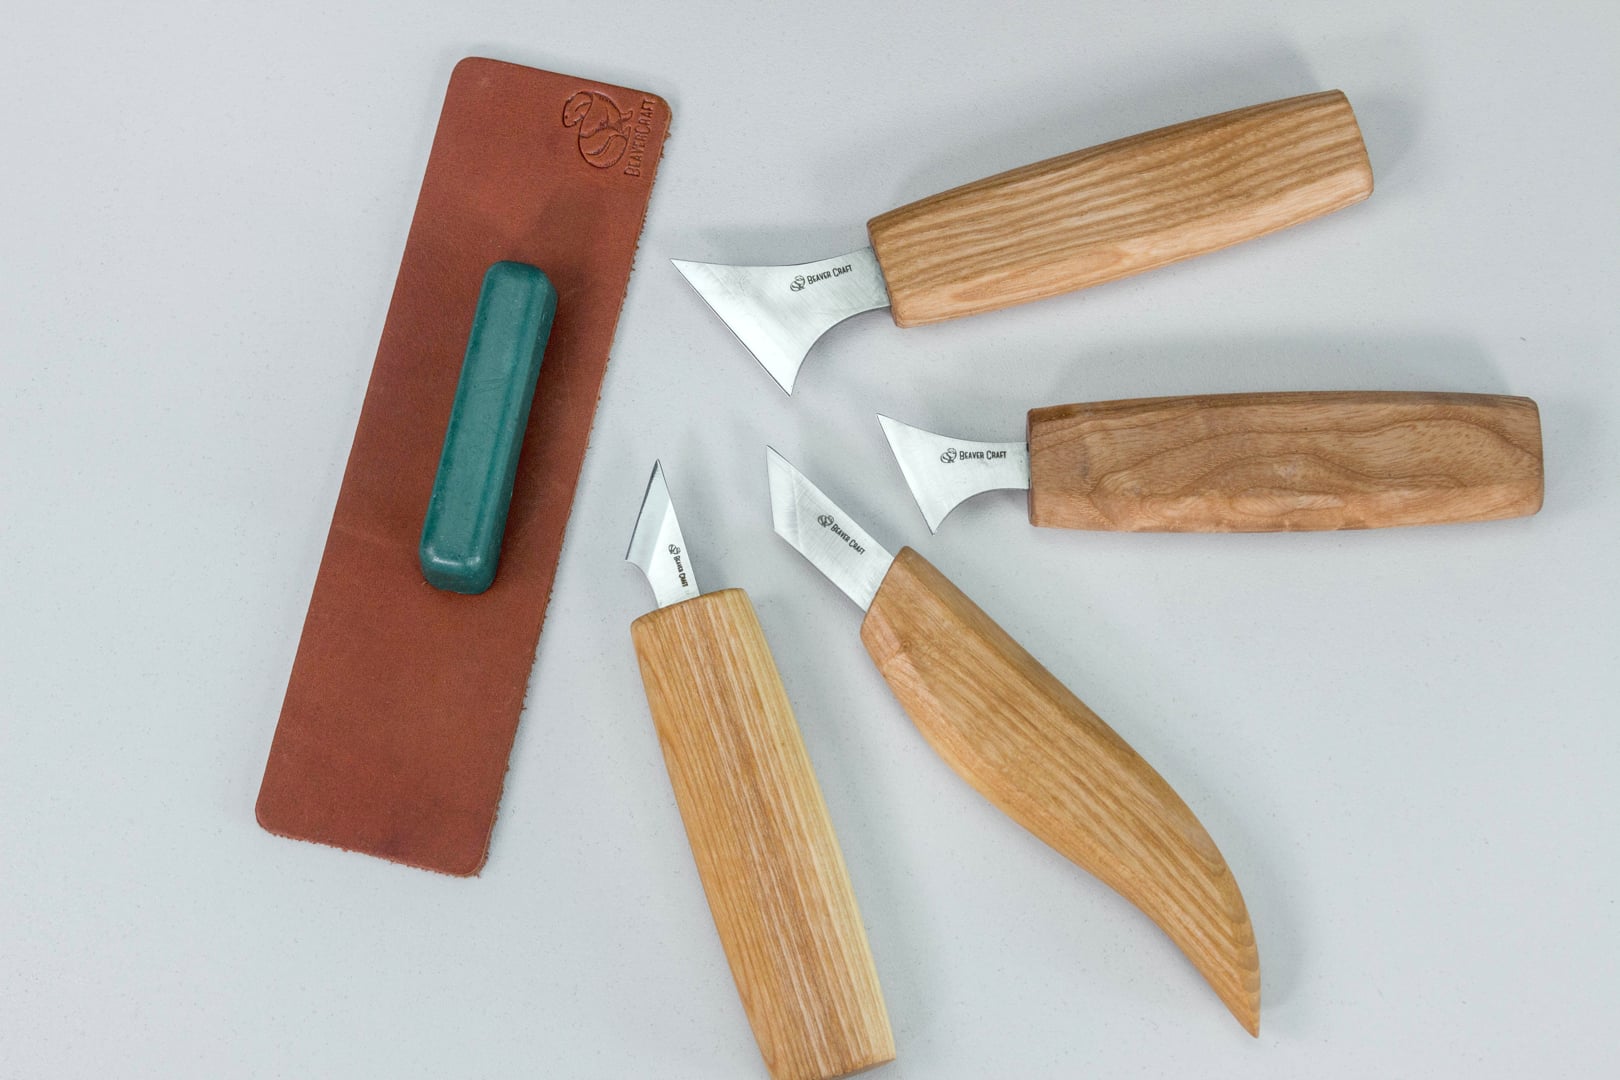  BeaverCraft Wood Carving Tools SC05 Wood Carving Kit